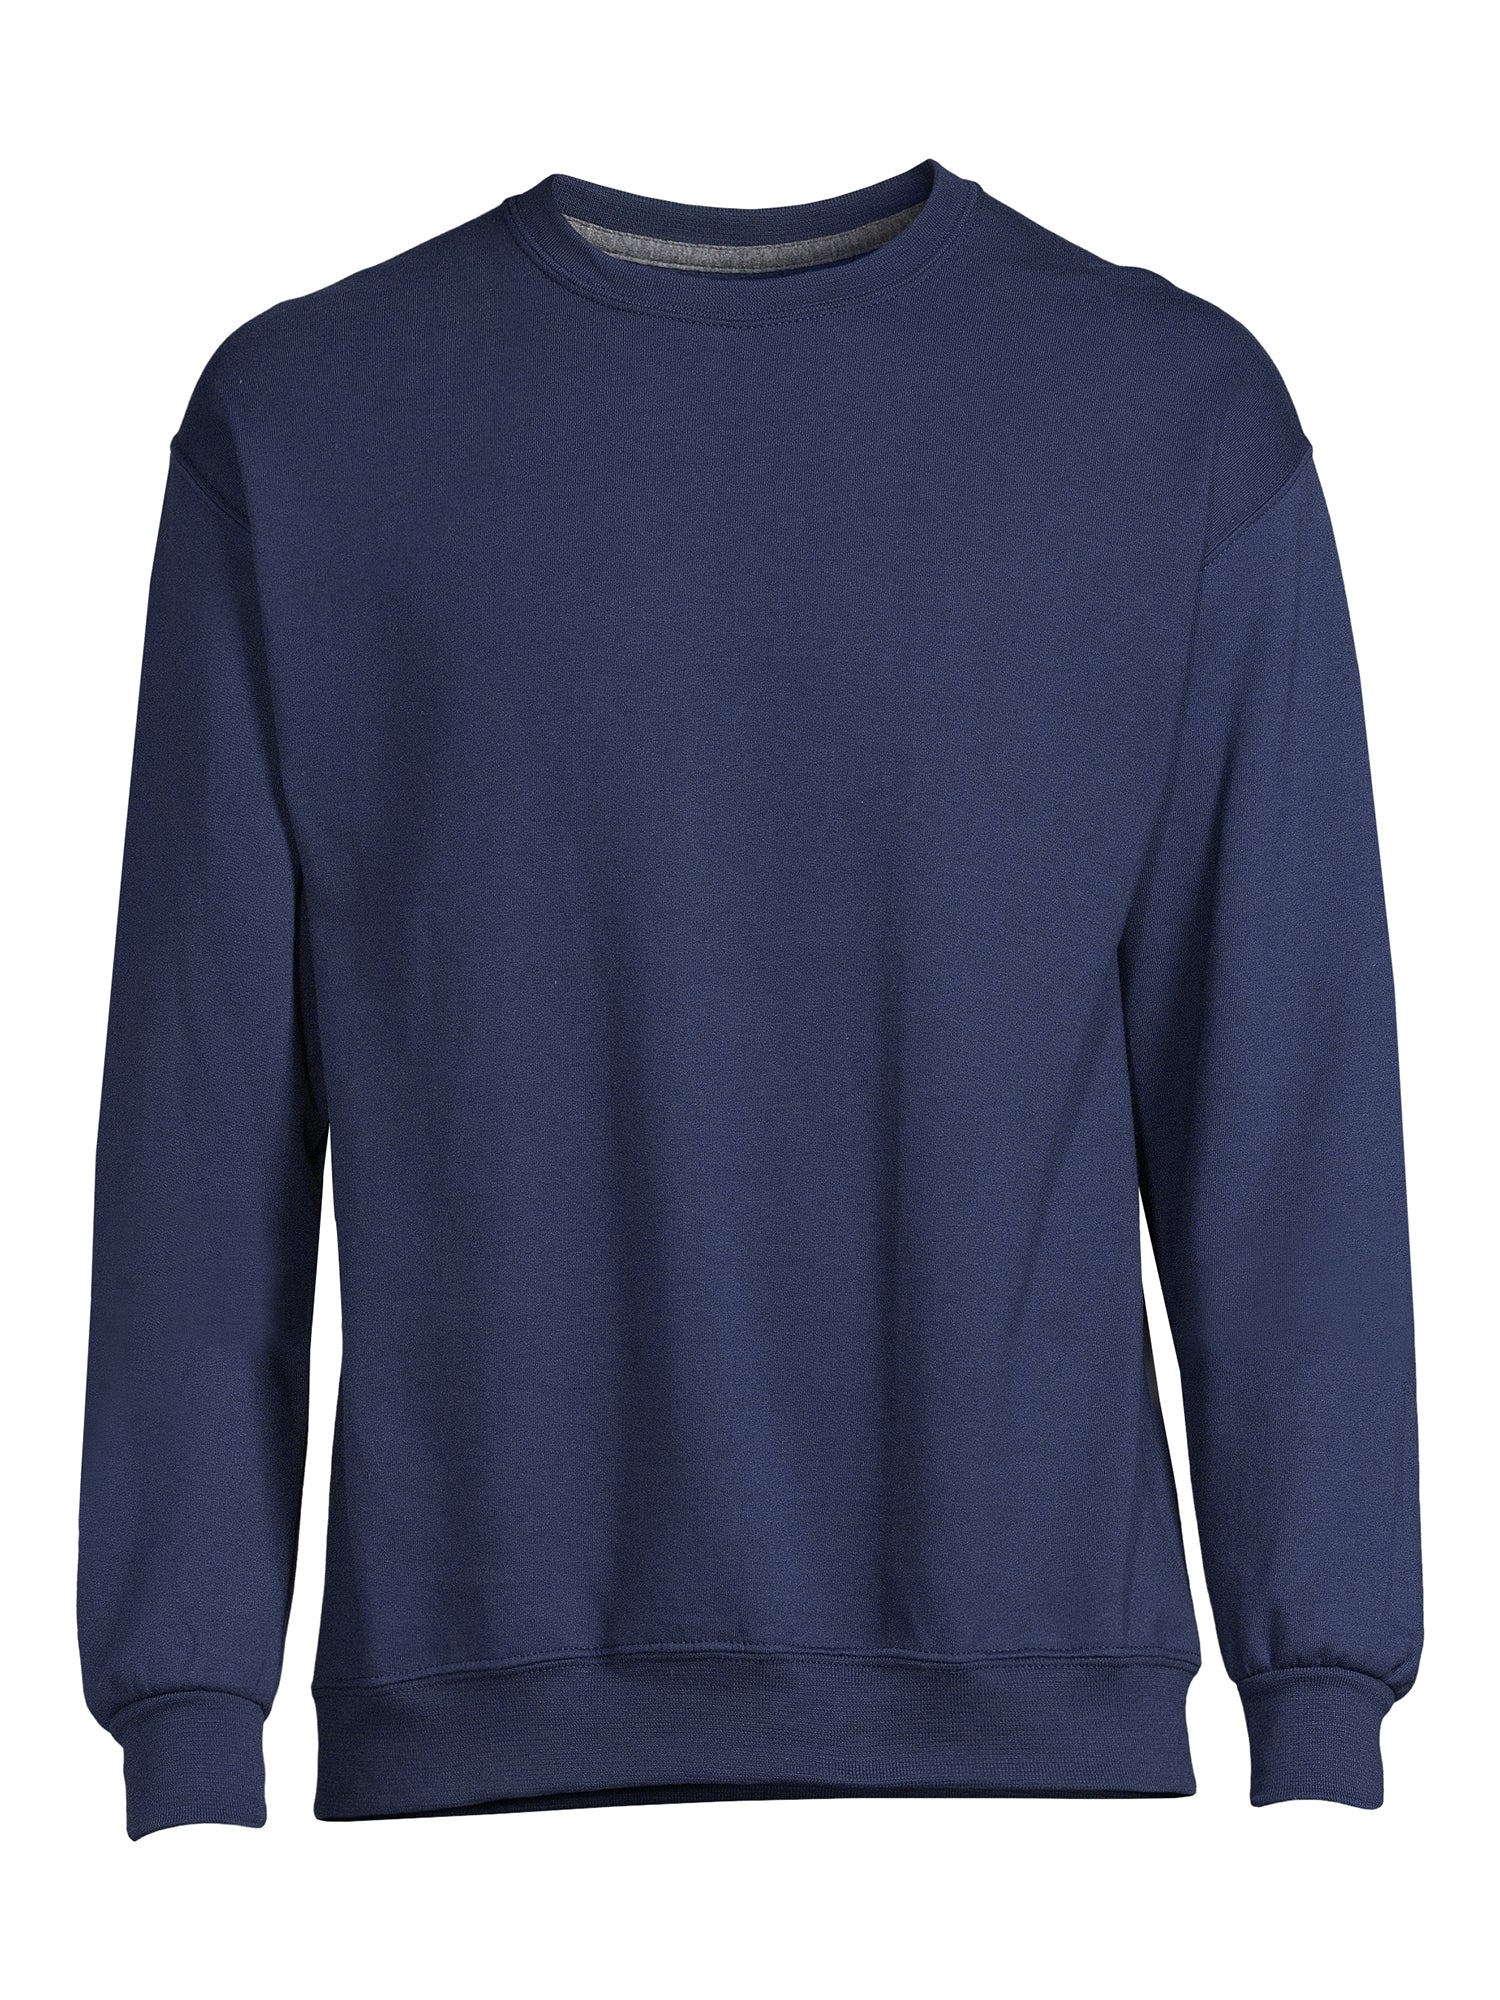 Athletic Works Men's Fleece Crewneck Sweatshirt, Sizes S-2XL